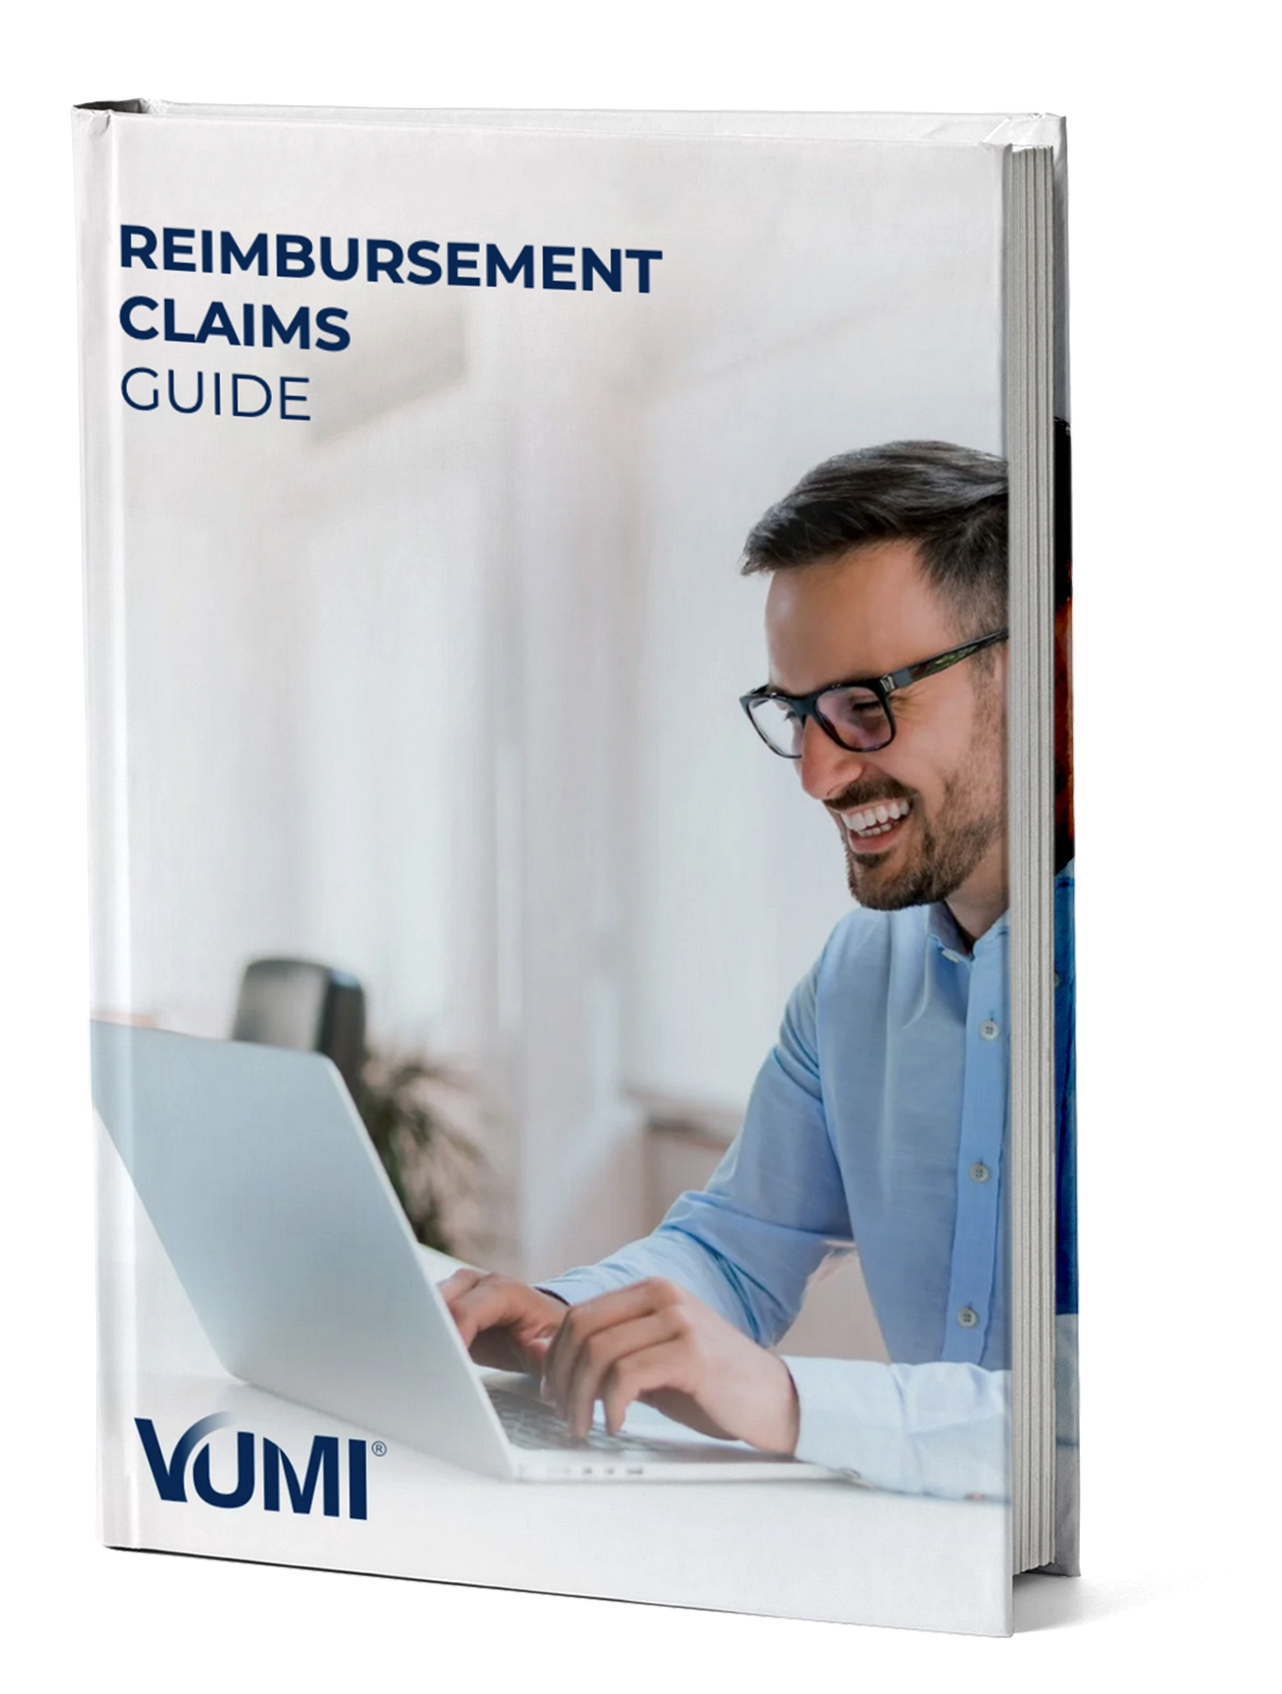 Reimbursement claims guide